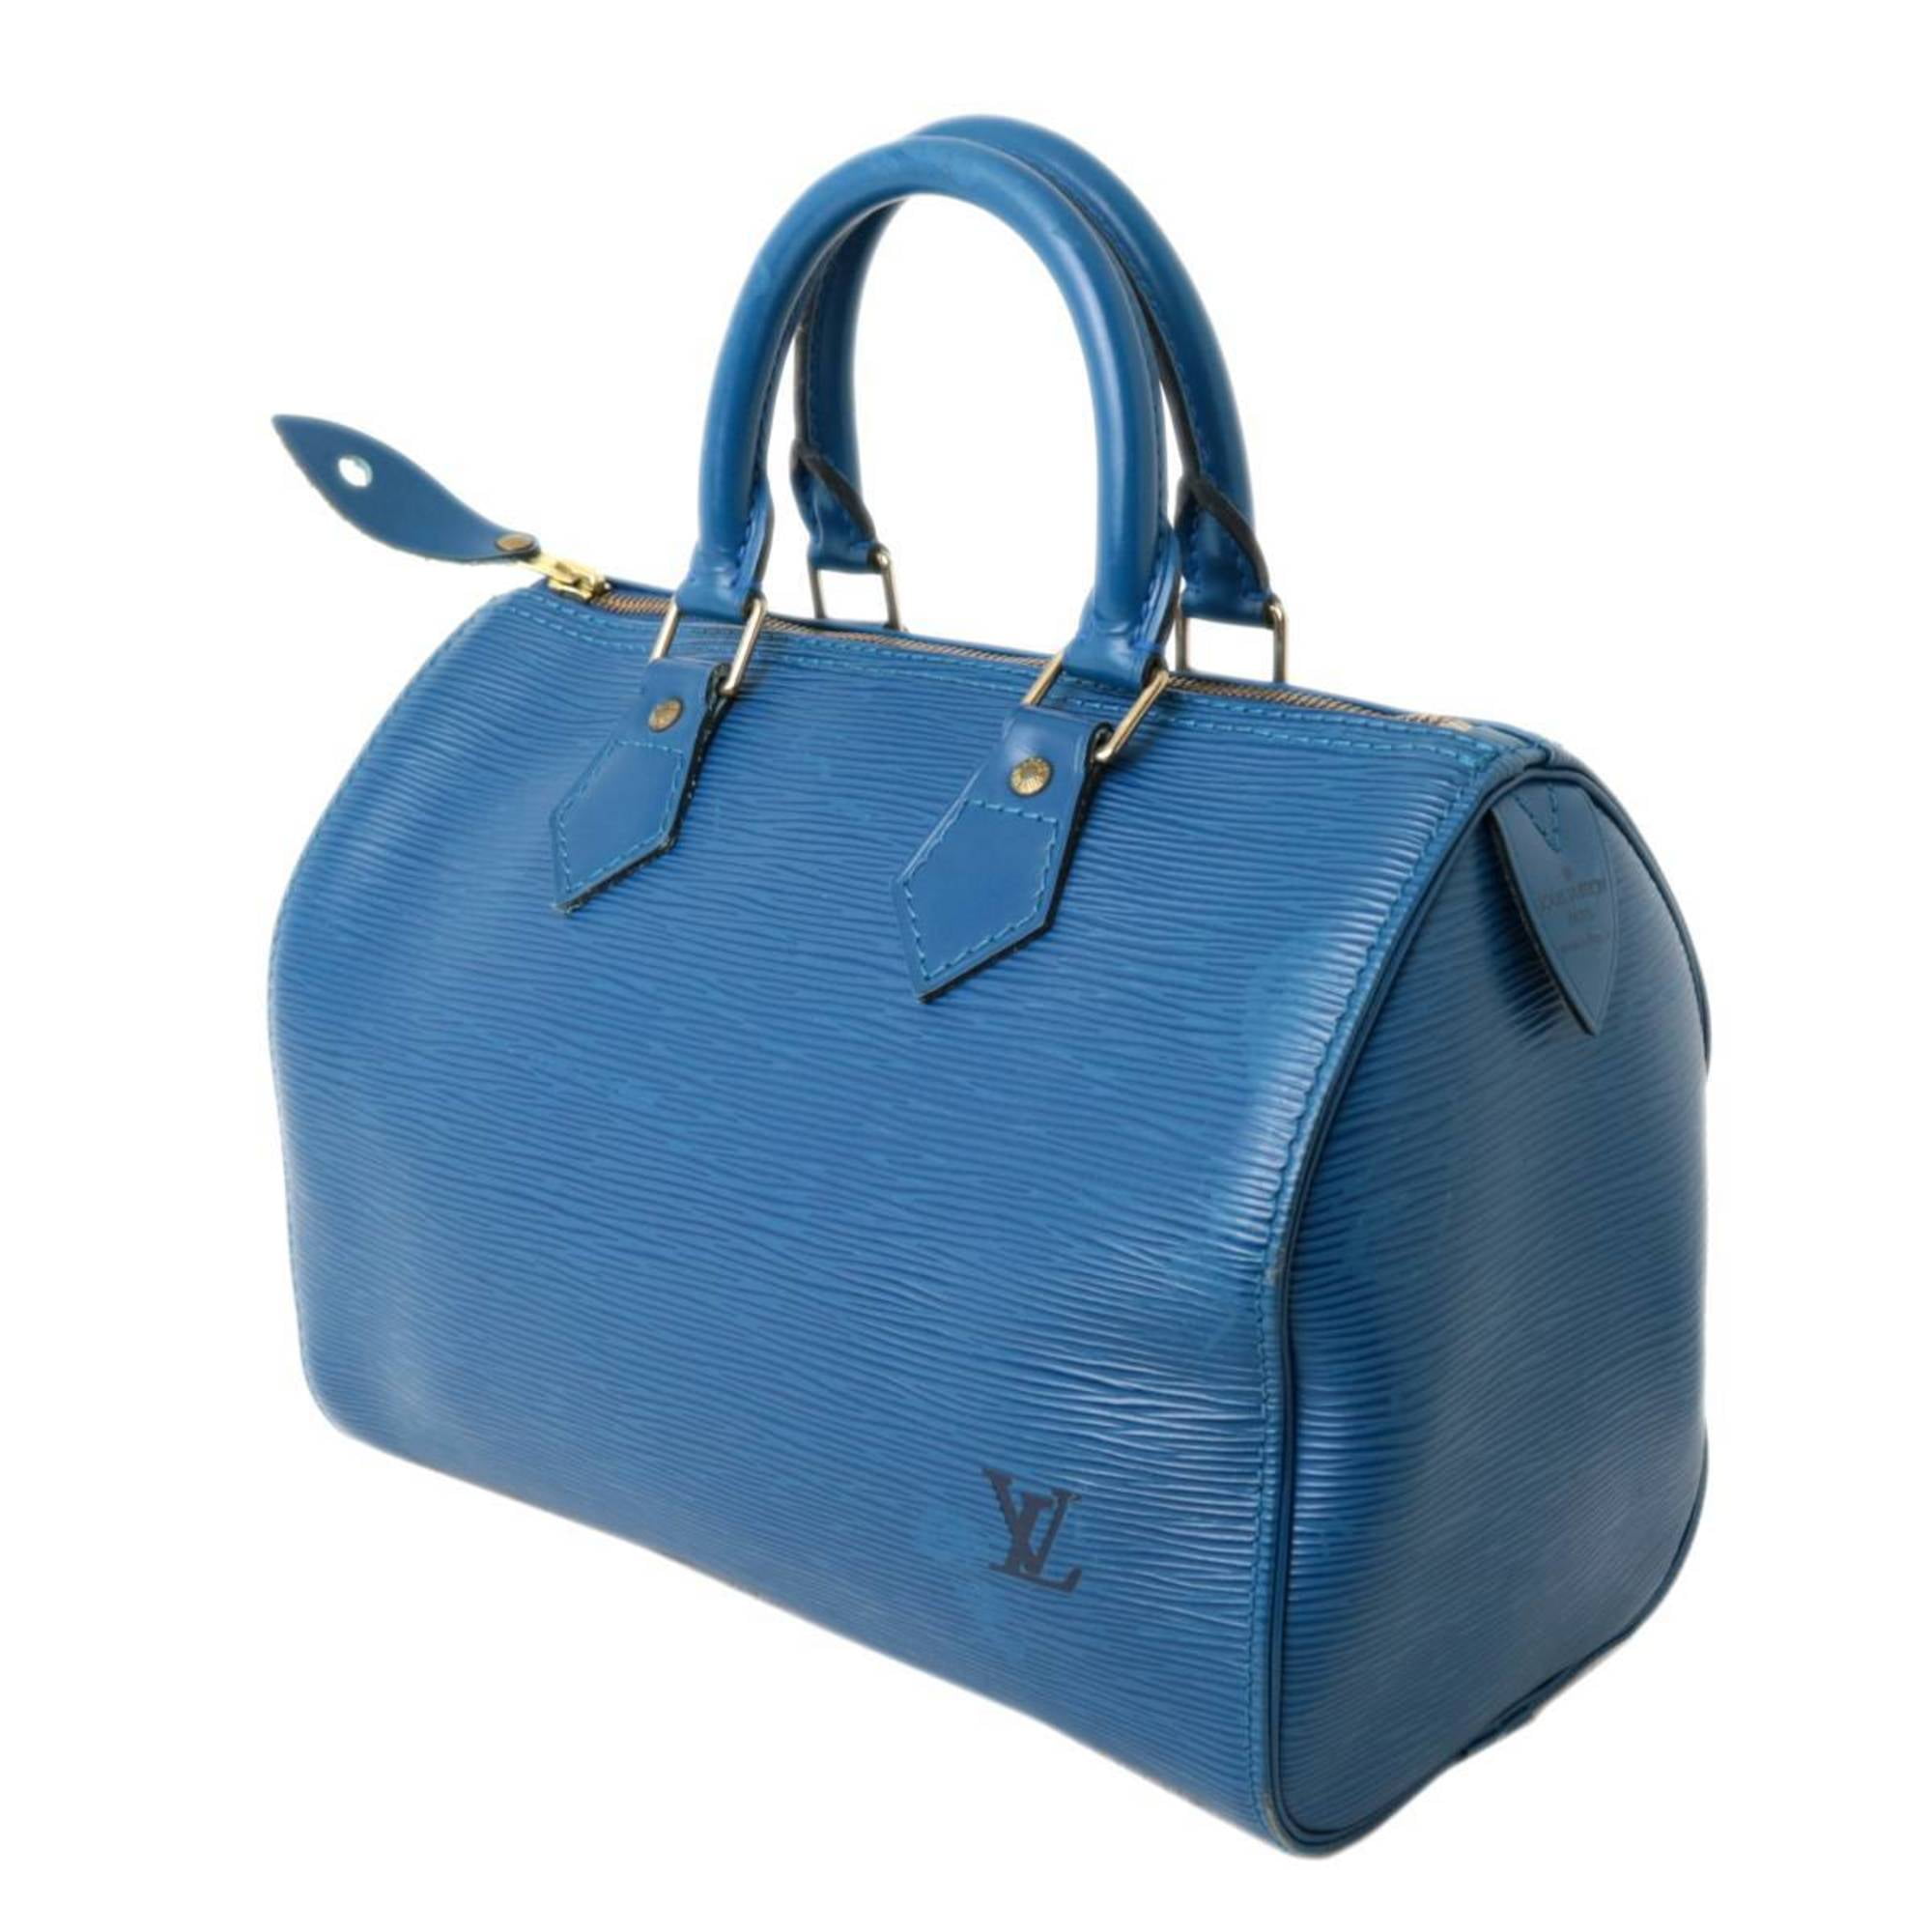 Louis Vuitton Speedy 25 Epi Handbag Mini Boston Blue used from japan